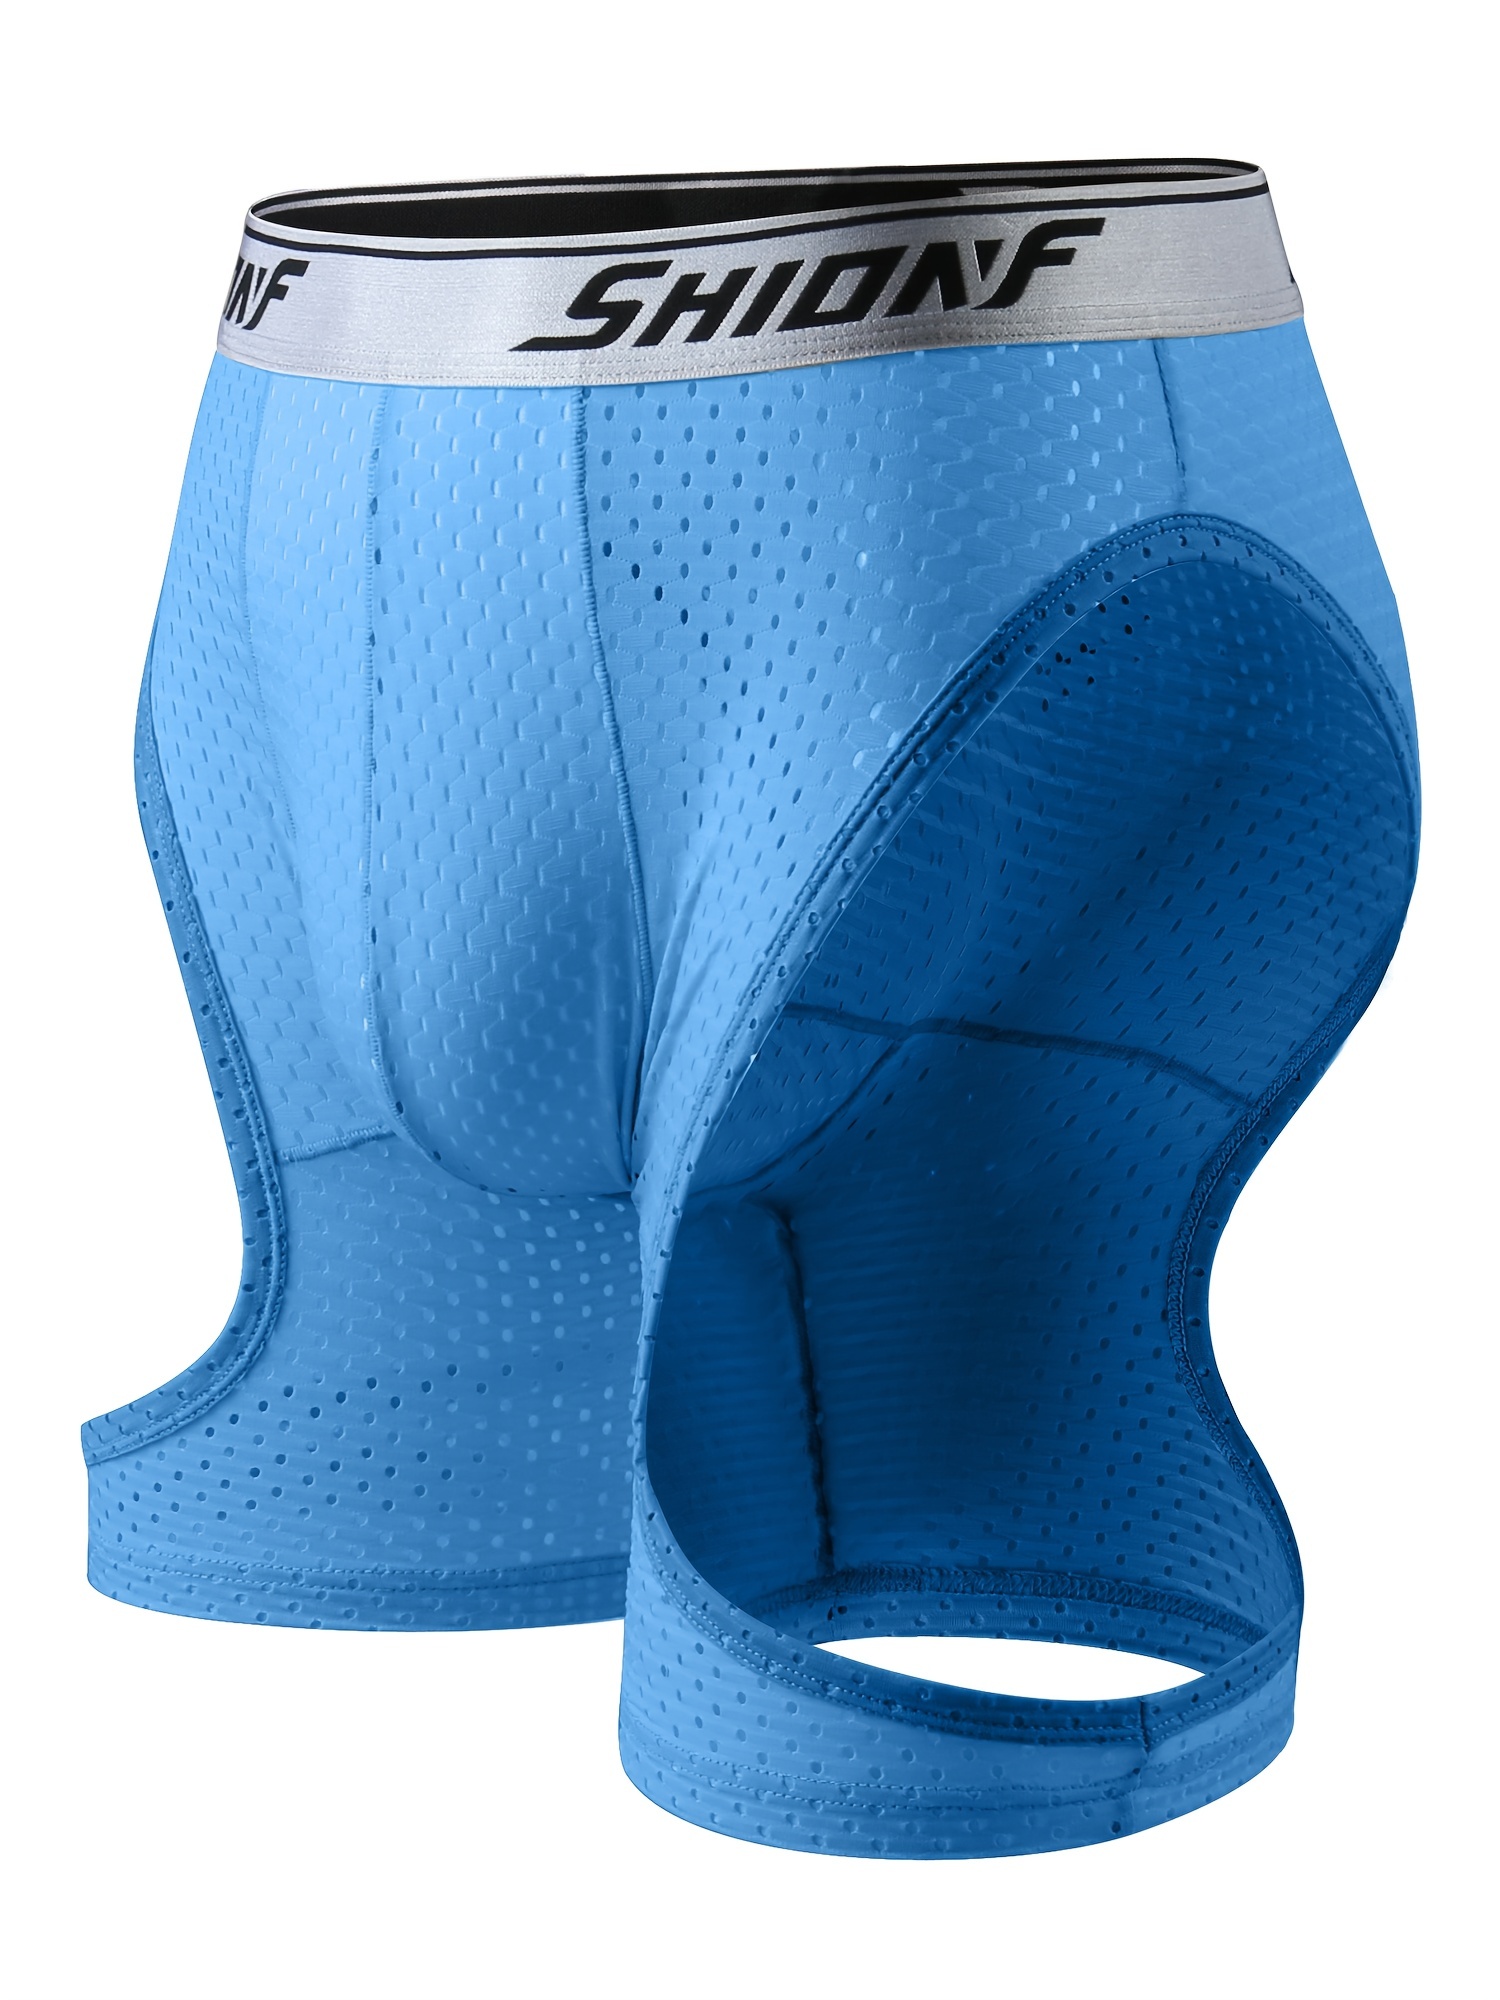 QAZXD Men's Underwear Ice Silk Sweat Absorbing Breathable Boxer Briefs Buy  2 Get 1 Free（Sky Blue，L） 